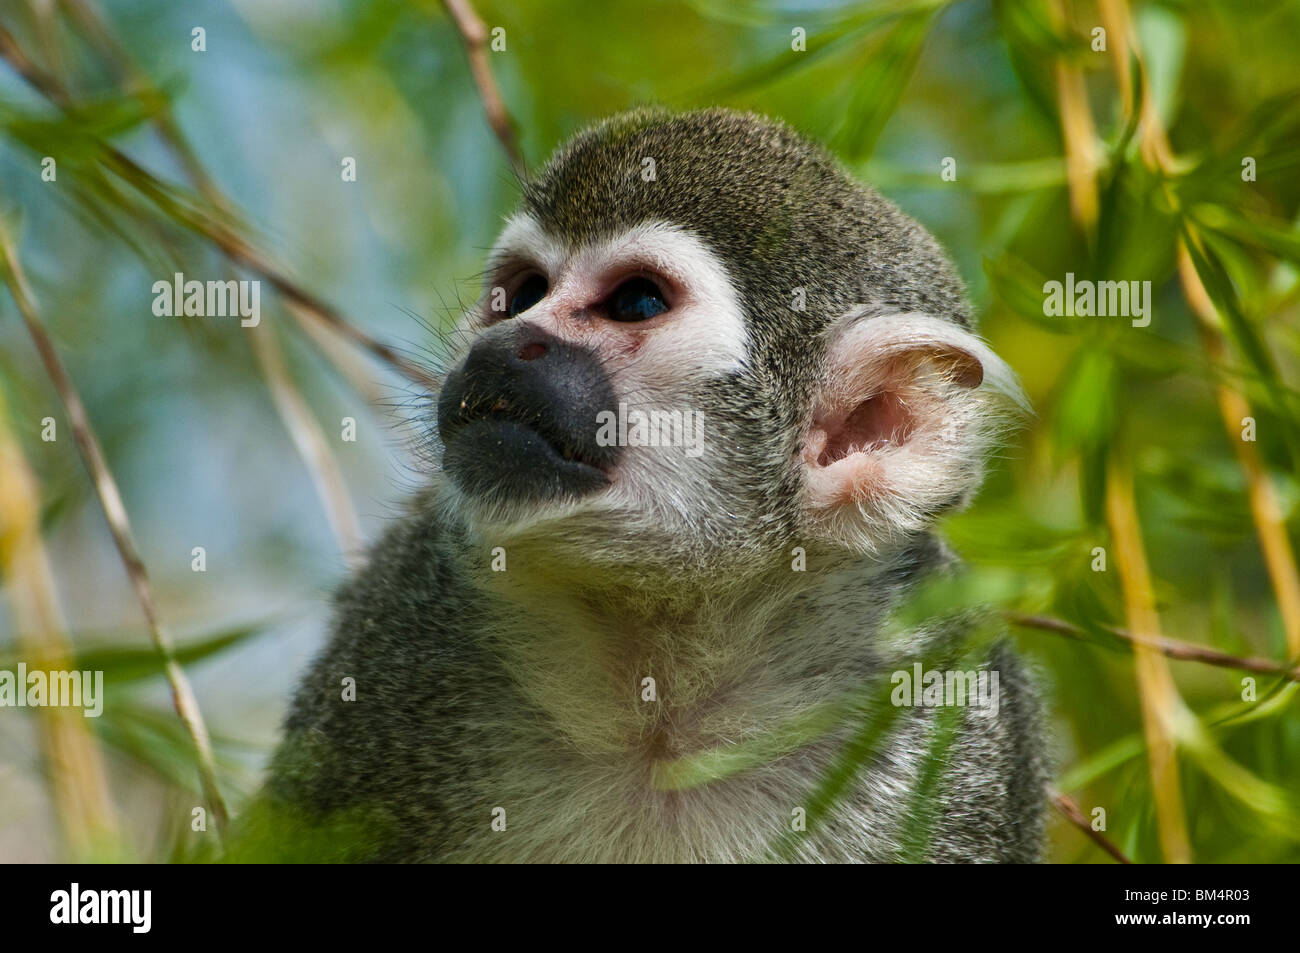 Common Squirrel Monkey, Portrait, Saimiri sciureus Stock Photo